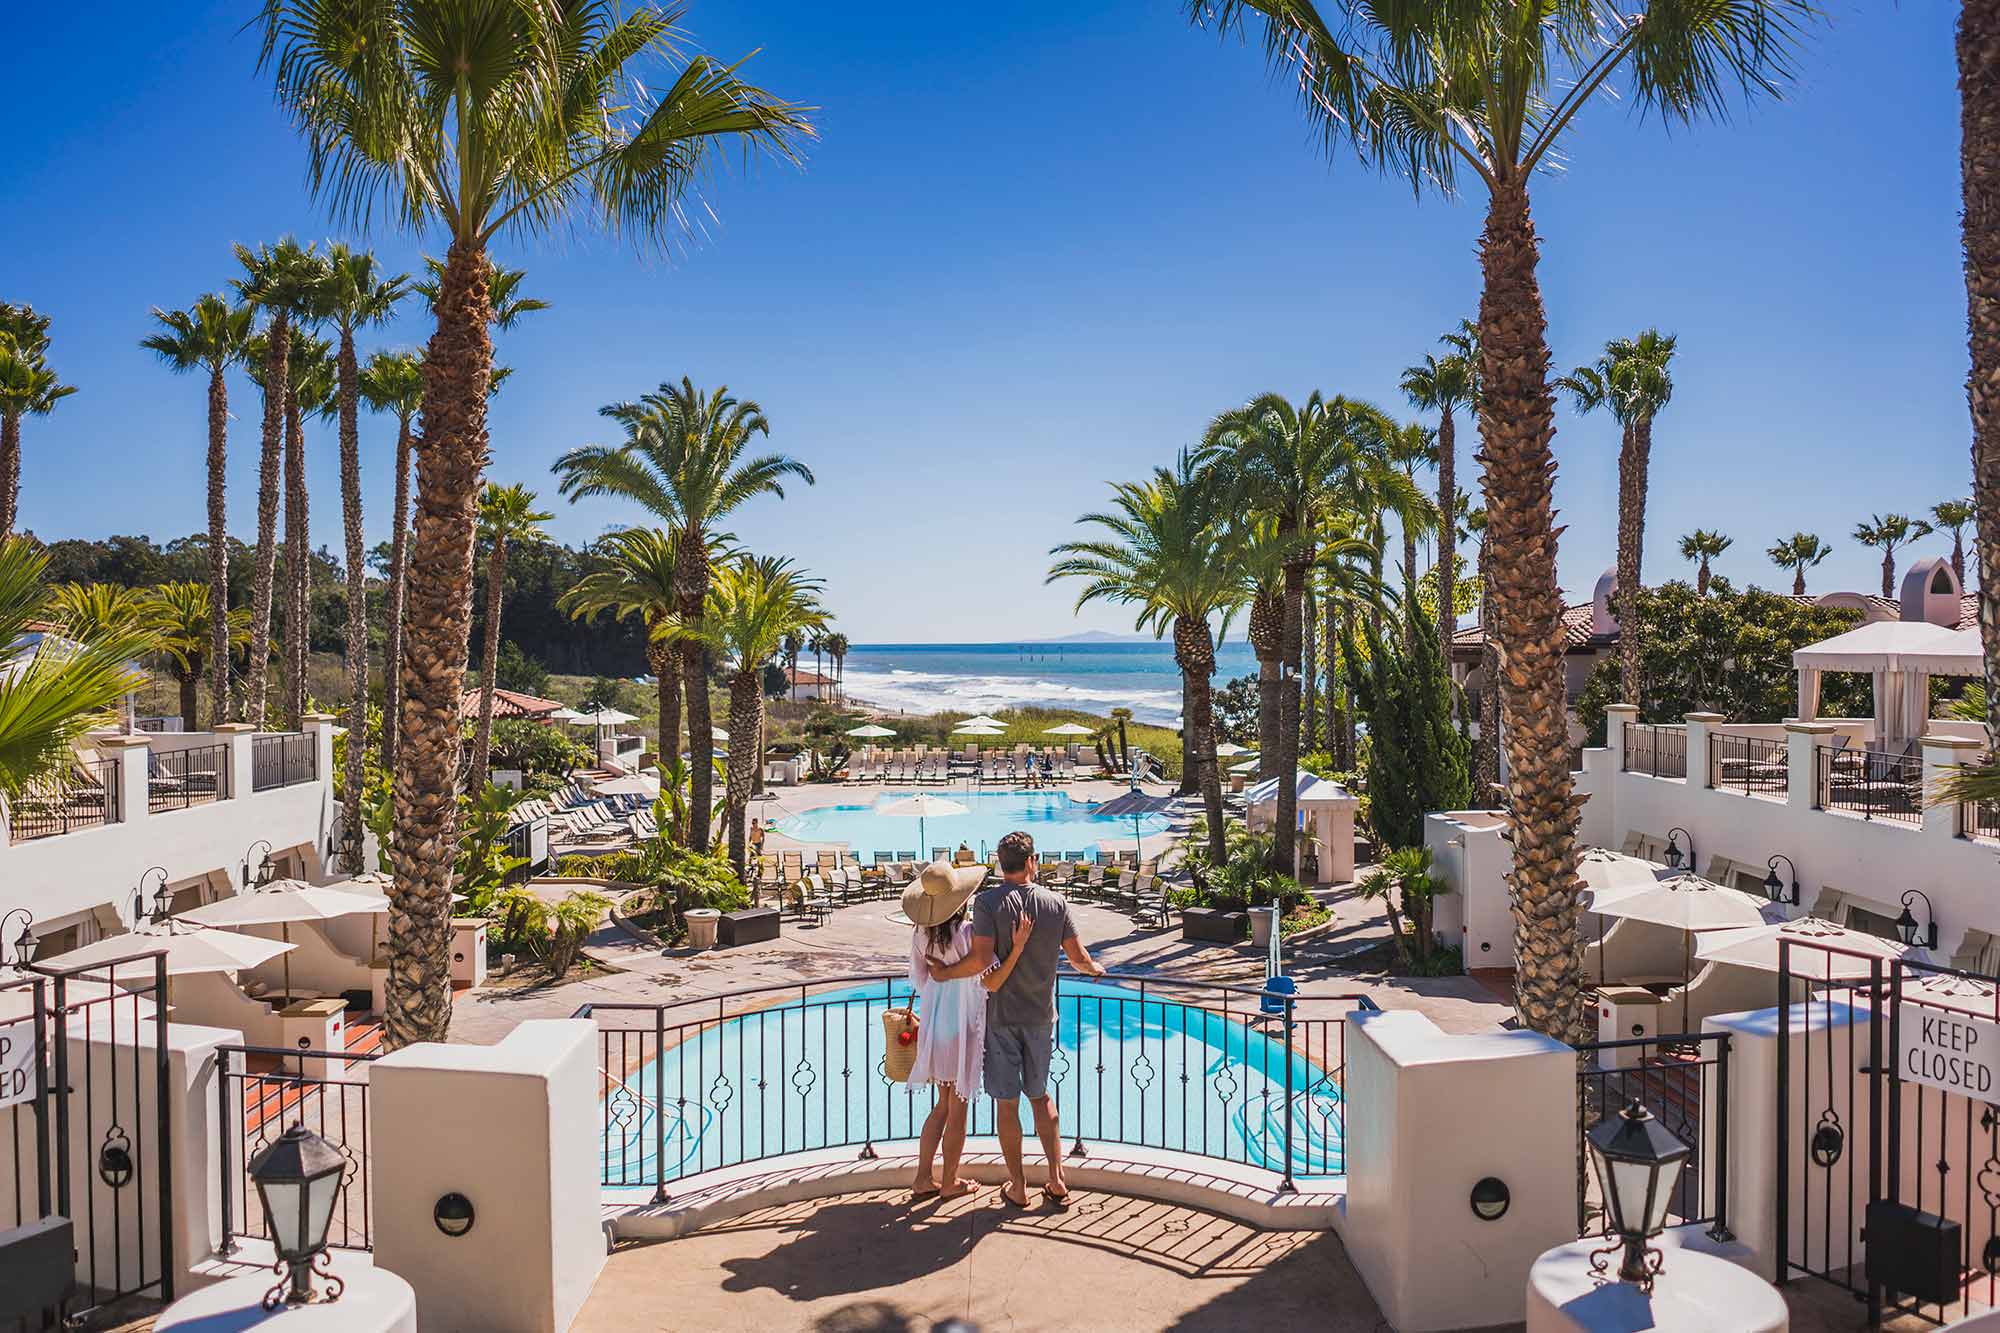 Best Hotels in Santa Barbara